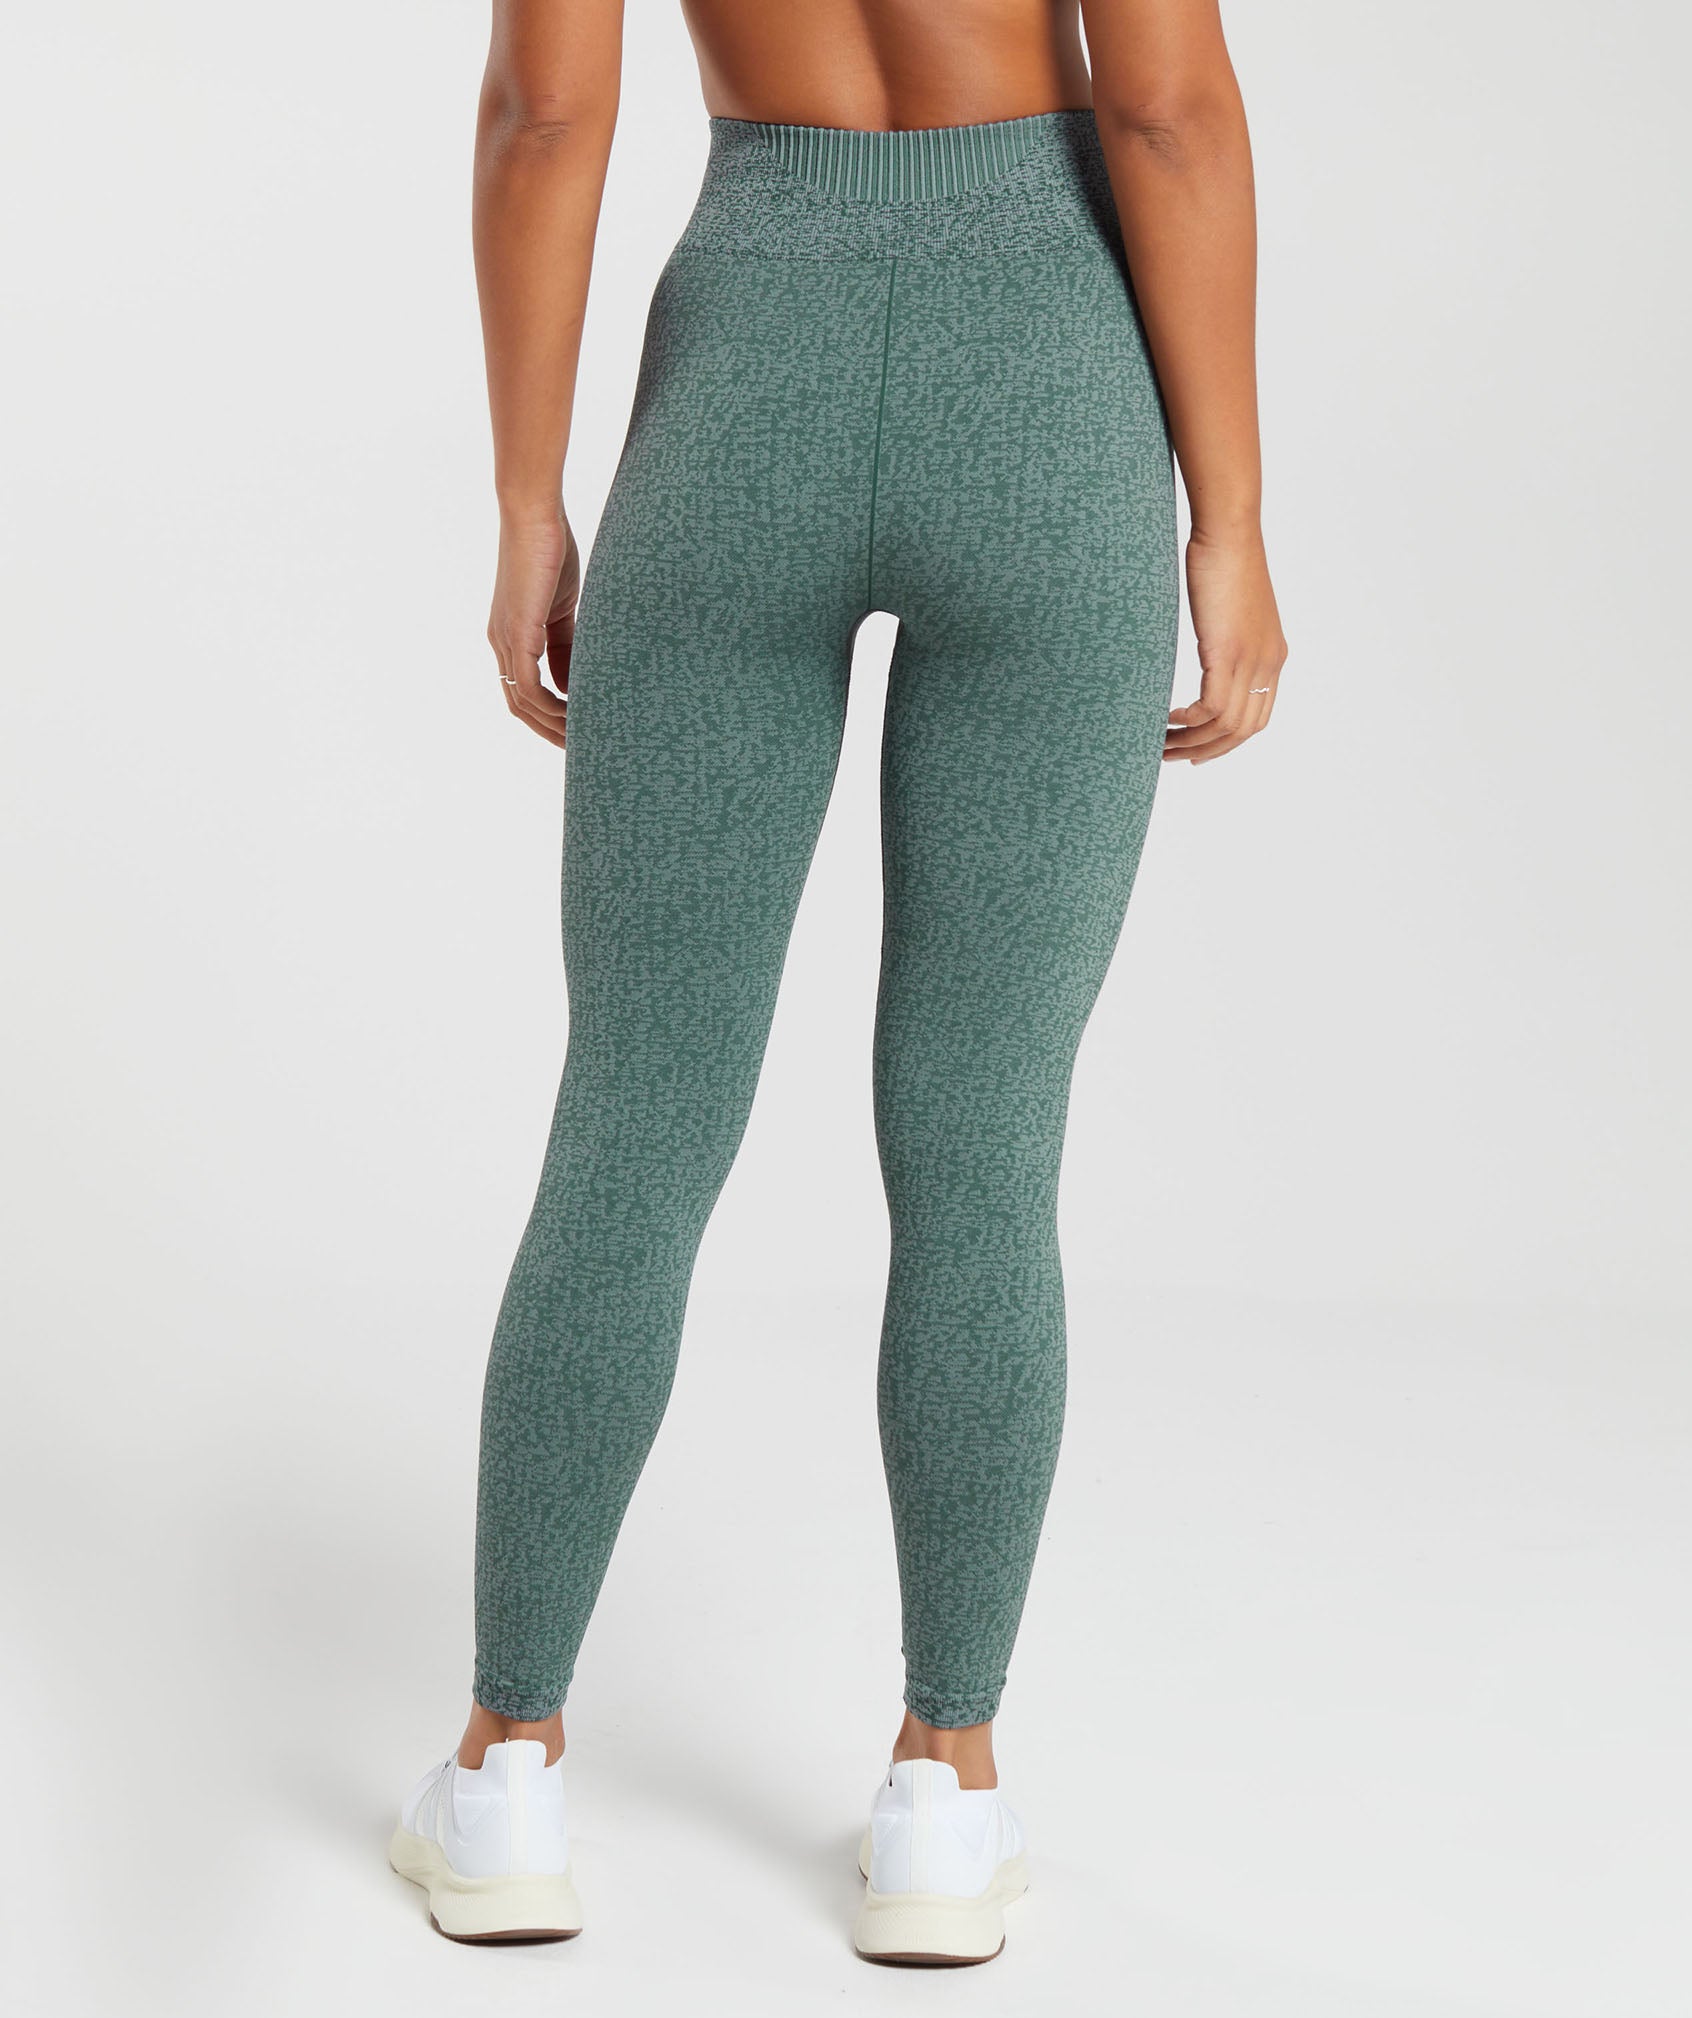 Gymshark women's tight abstract mesh leggings size Medium